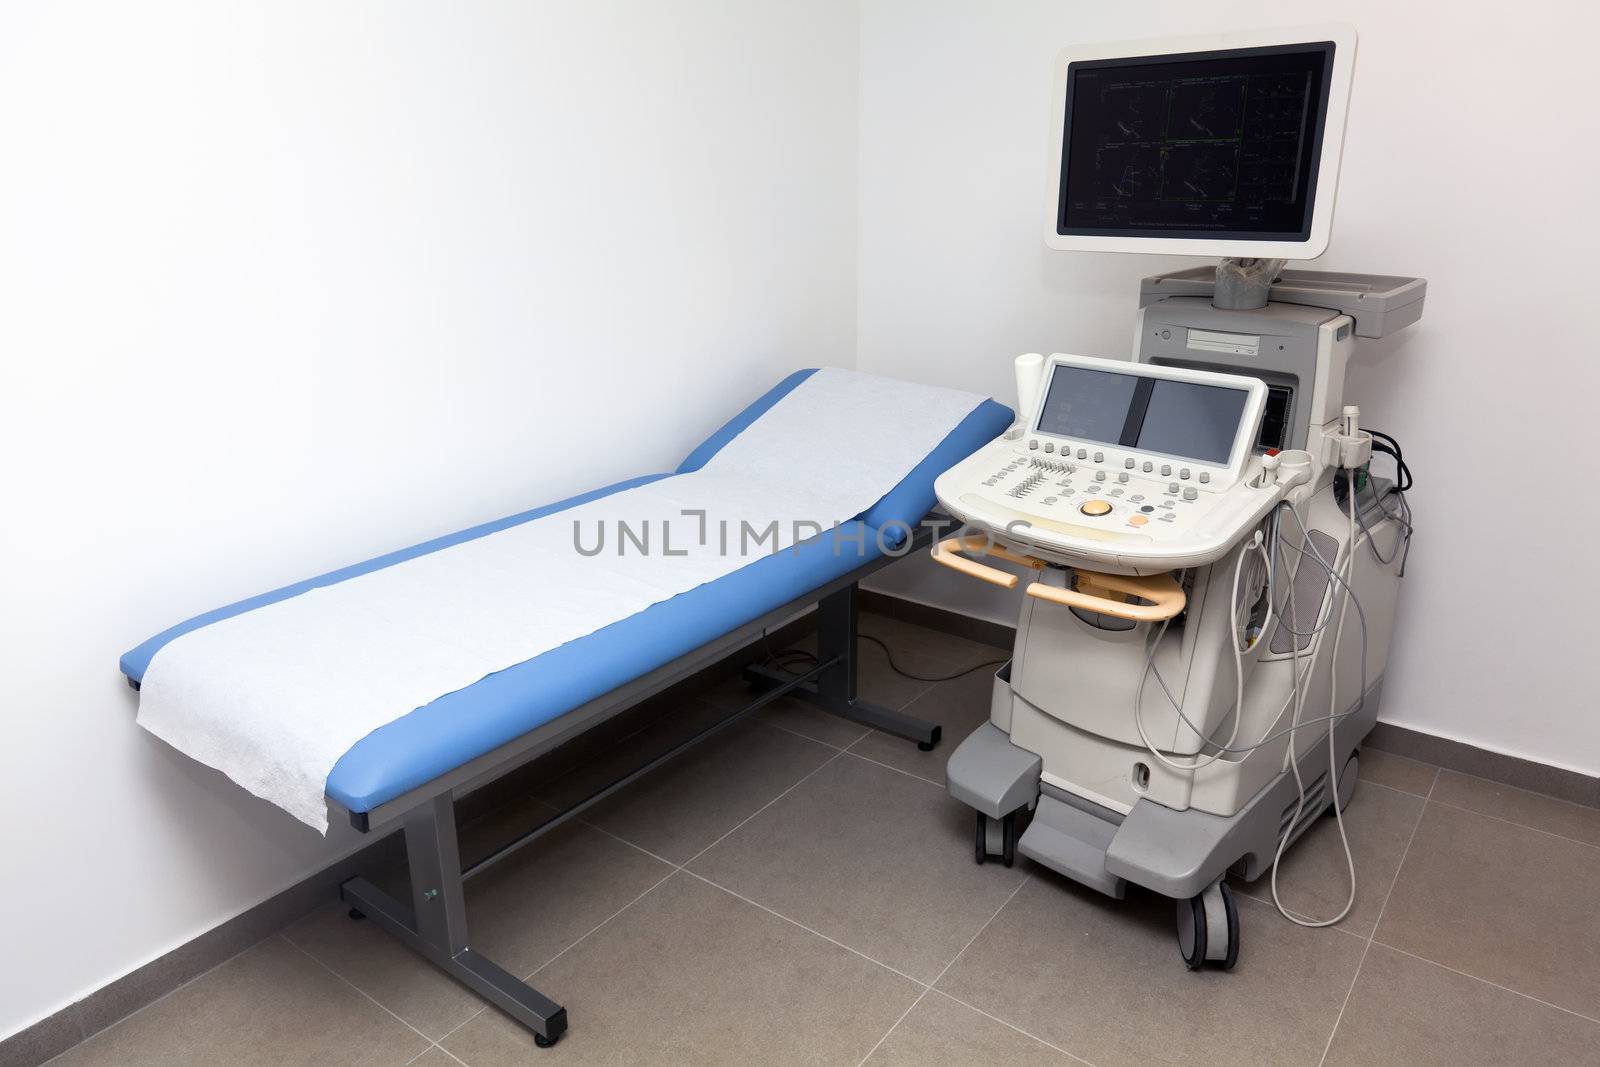 Ultrasound device by Portokalis